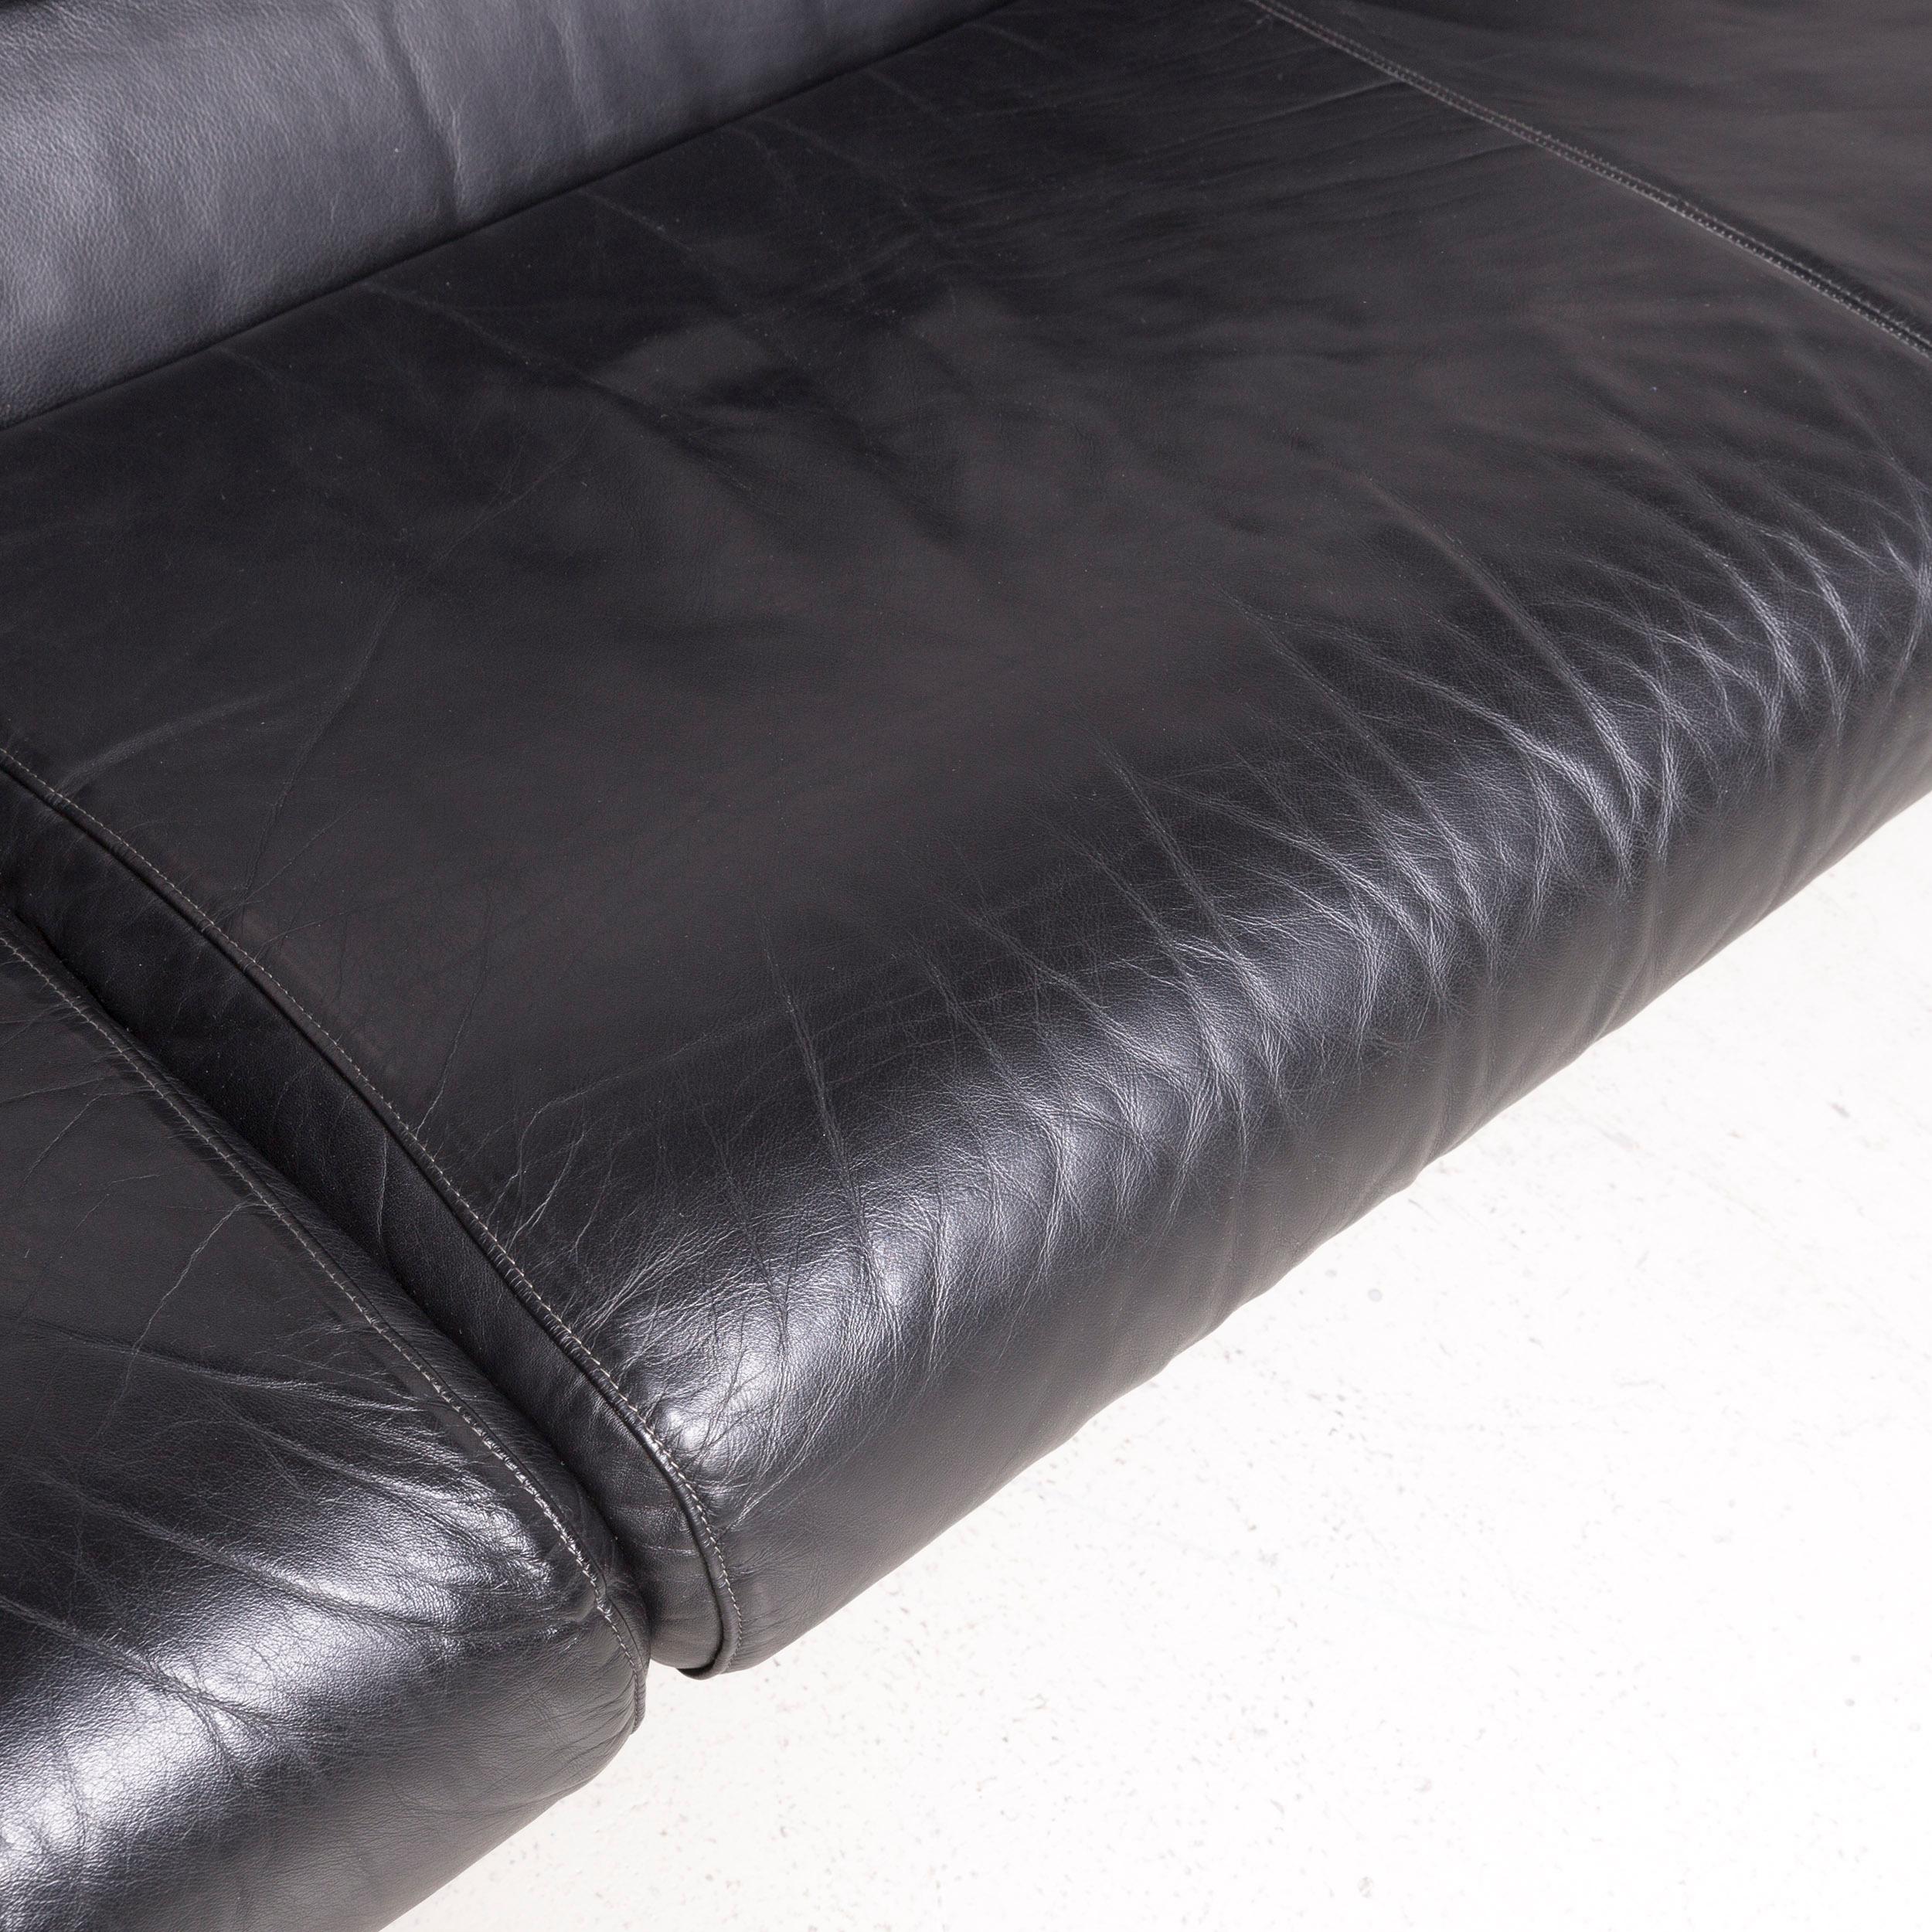 B&B Italia Alanda Designer Leather Sofa Black Three-Seat Couch Relax For Sale 1